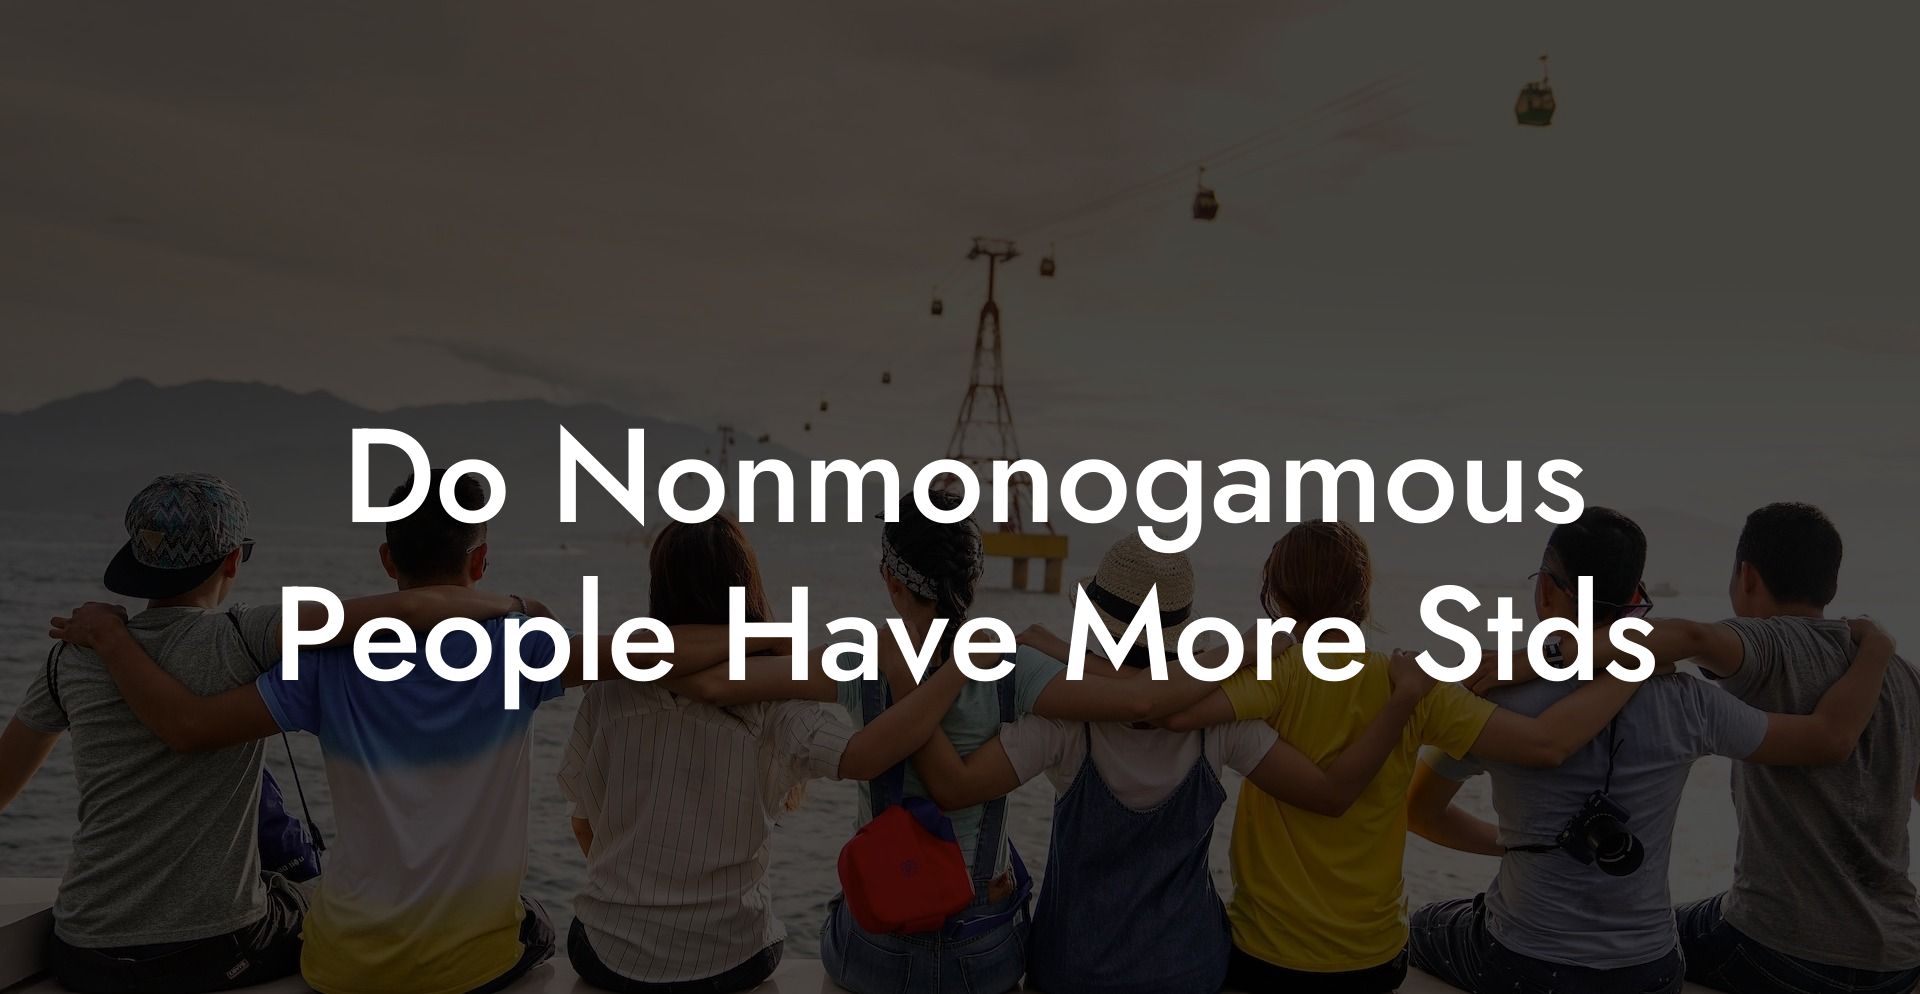 Do Nonmonogamous People Have More Stds